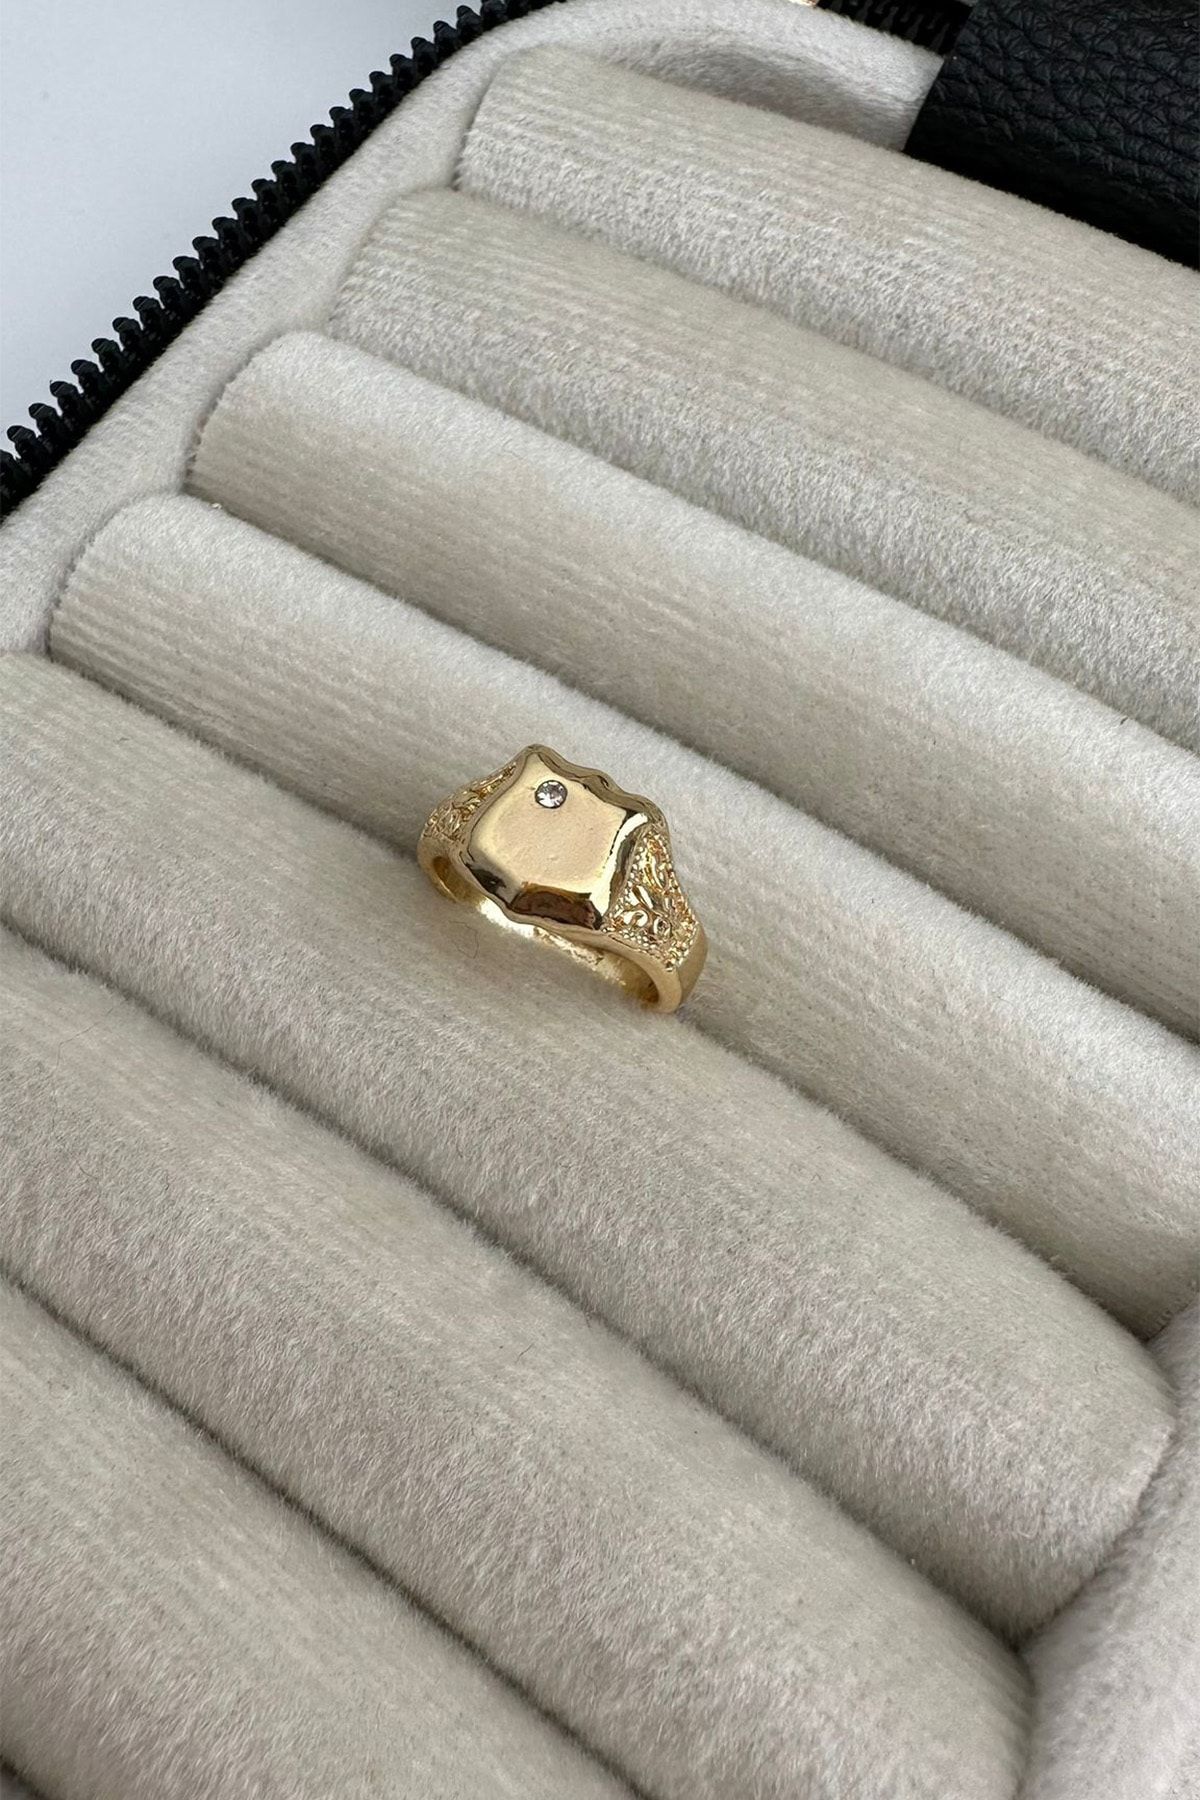 Modex Kadın Altın Kaplama Taş Detaylı Şövalye Serçe Parmağı Yüzüğü Uyz9909